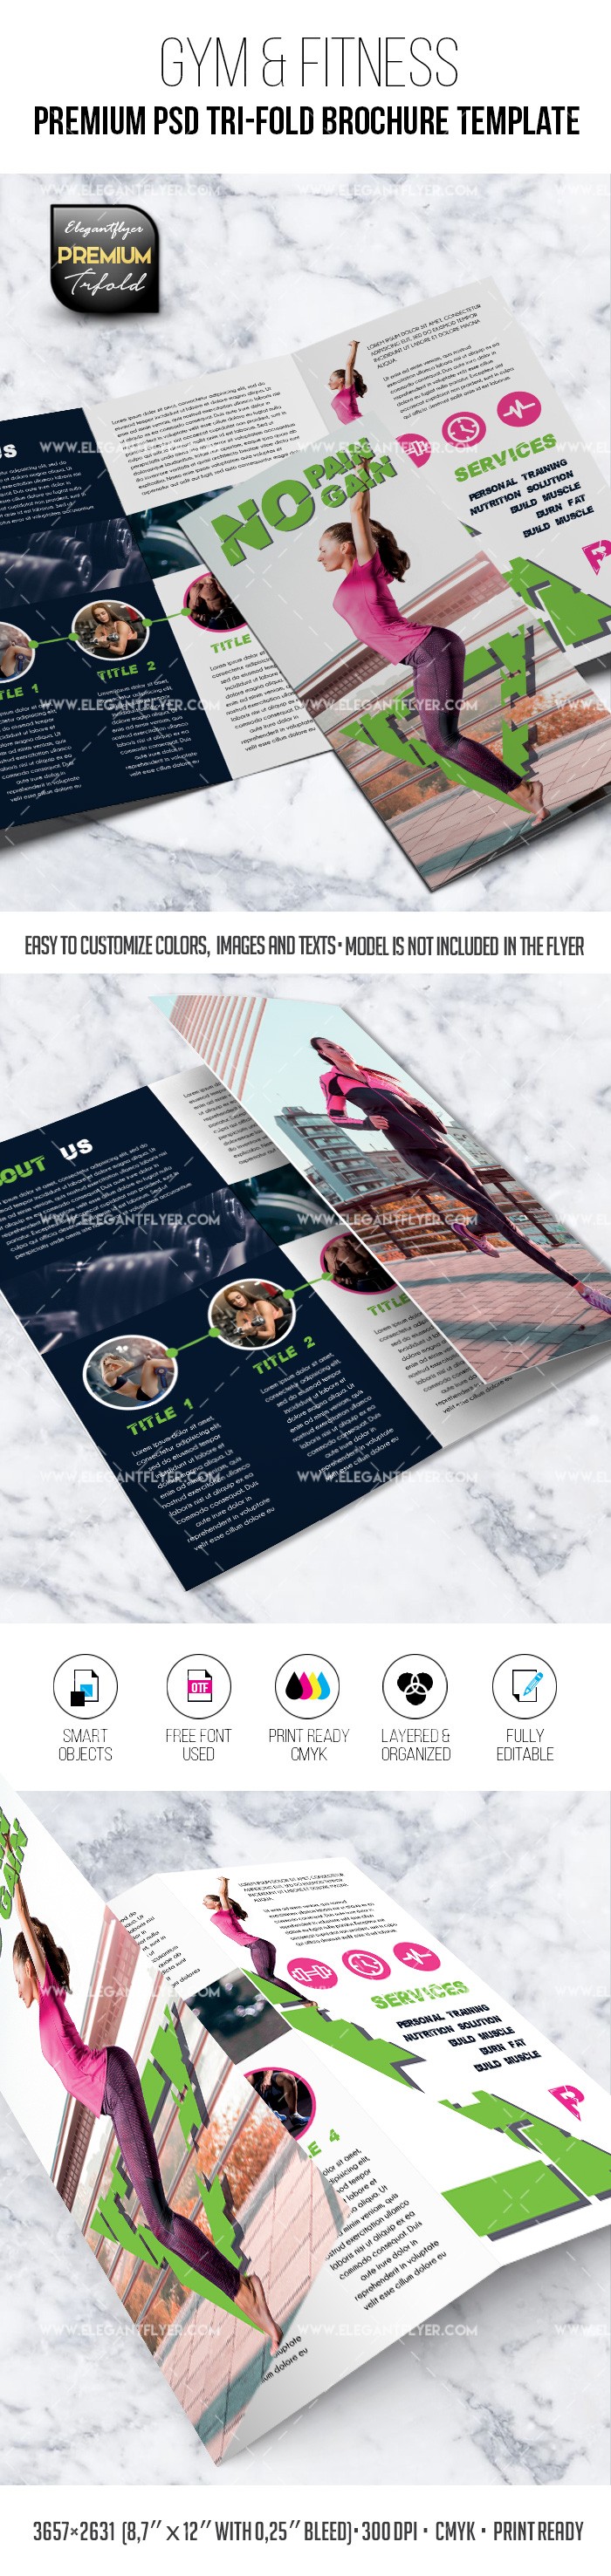 Gym & Fitness Tri-Fold Brochure by ElegantFlyer